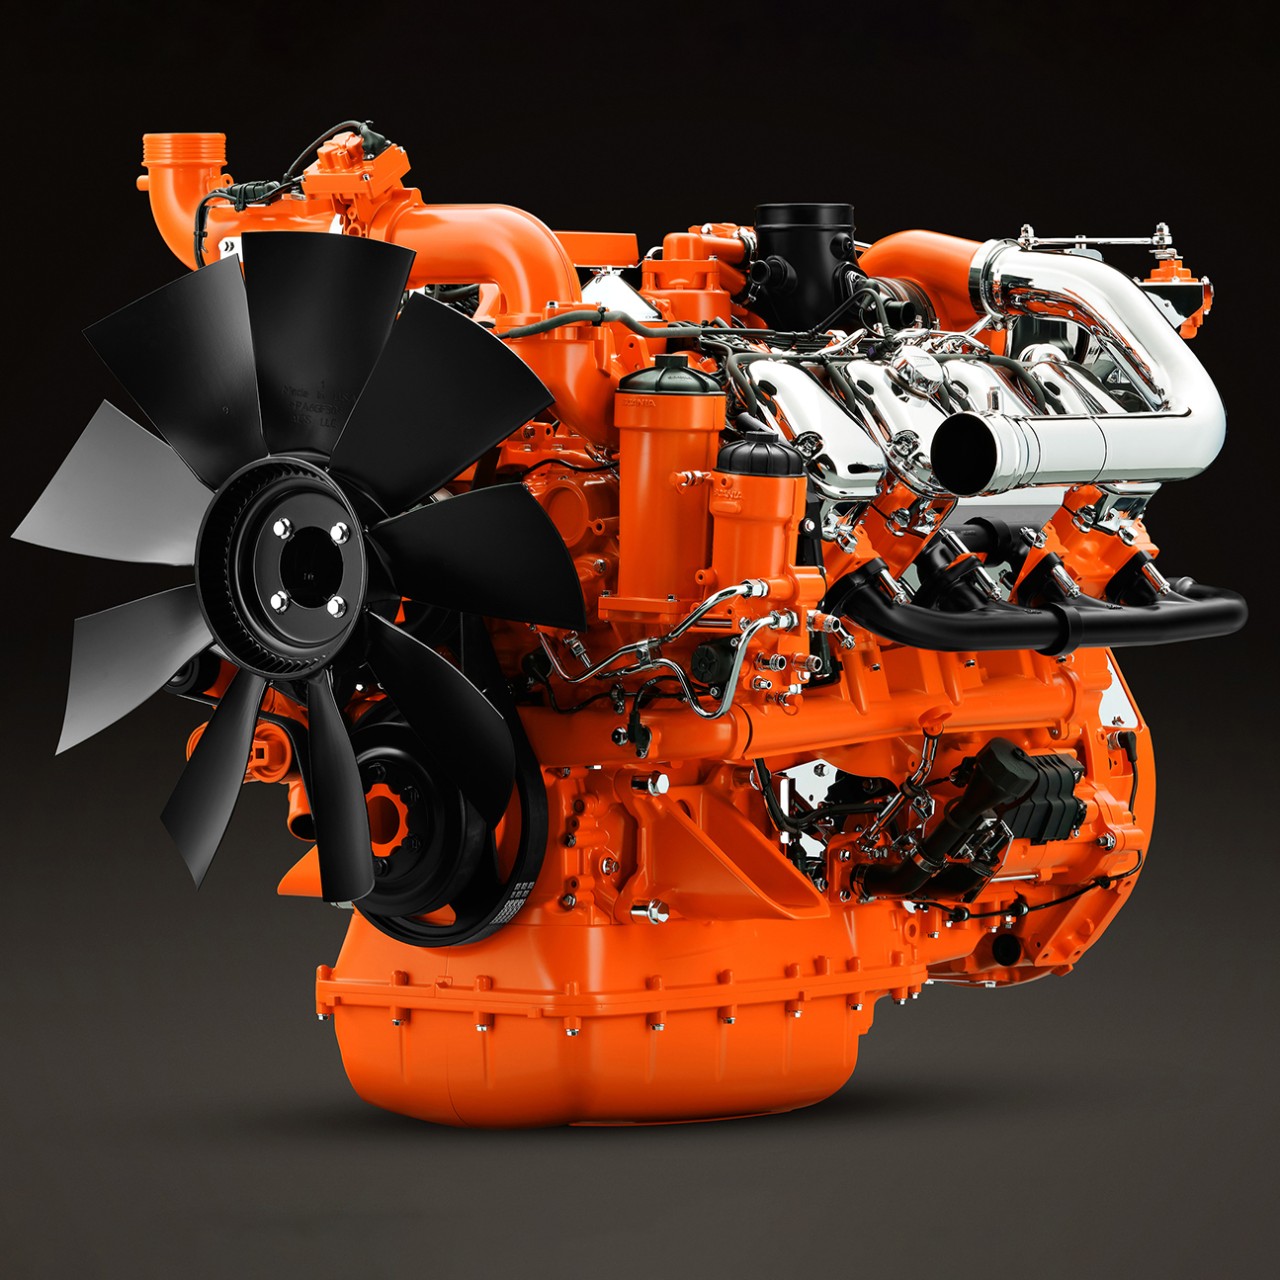  16-liters industrimotor från Scania